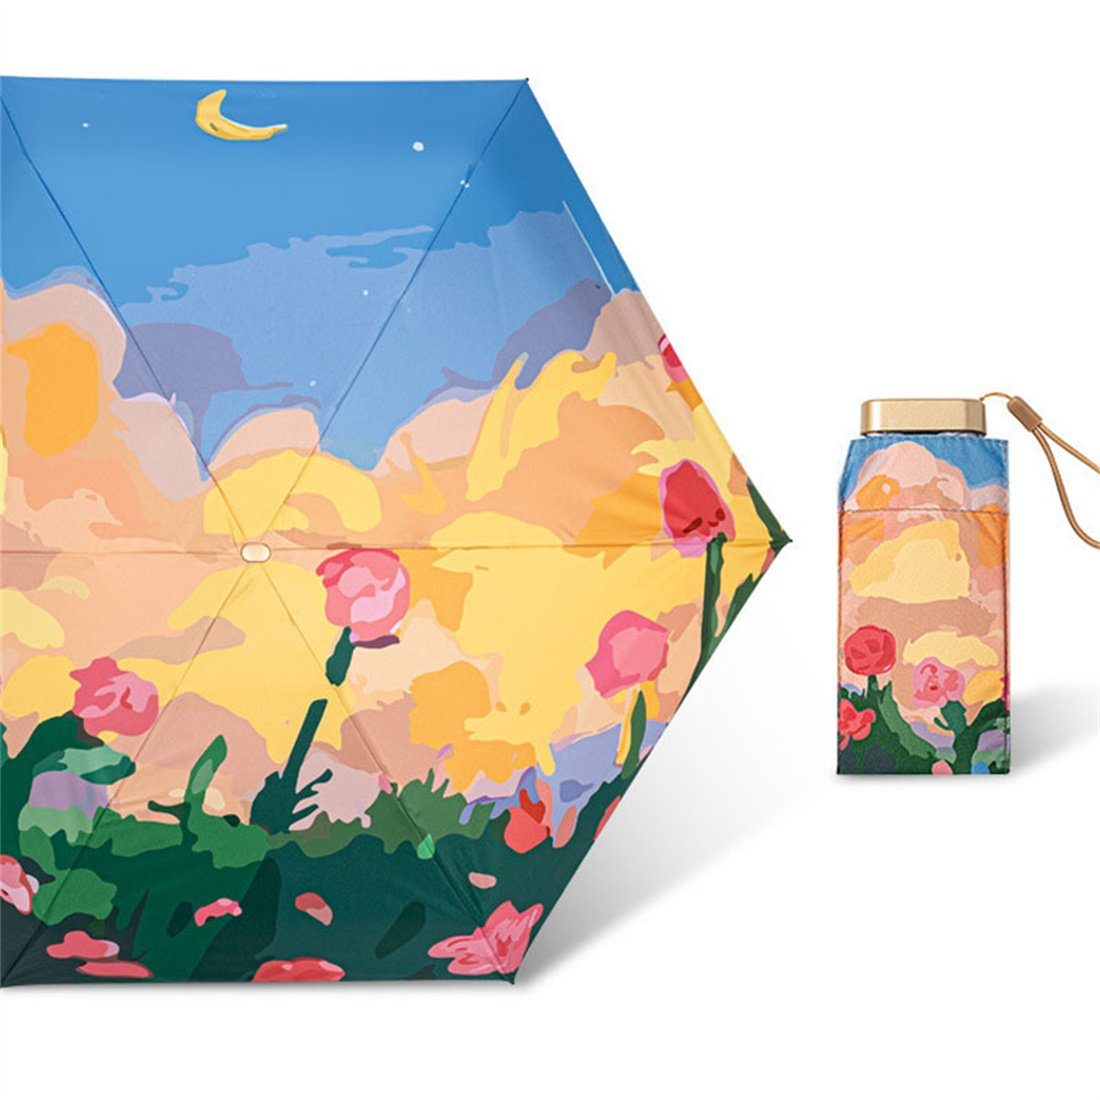 DÖRÖY Taschenregenschirm UV-Regenschirm, winddichter Sonnenschirm, Blumenmuster-Sonnenschirm